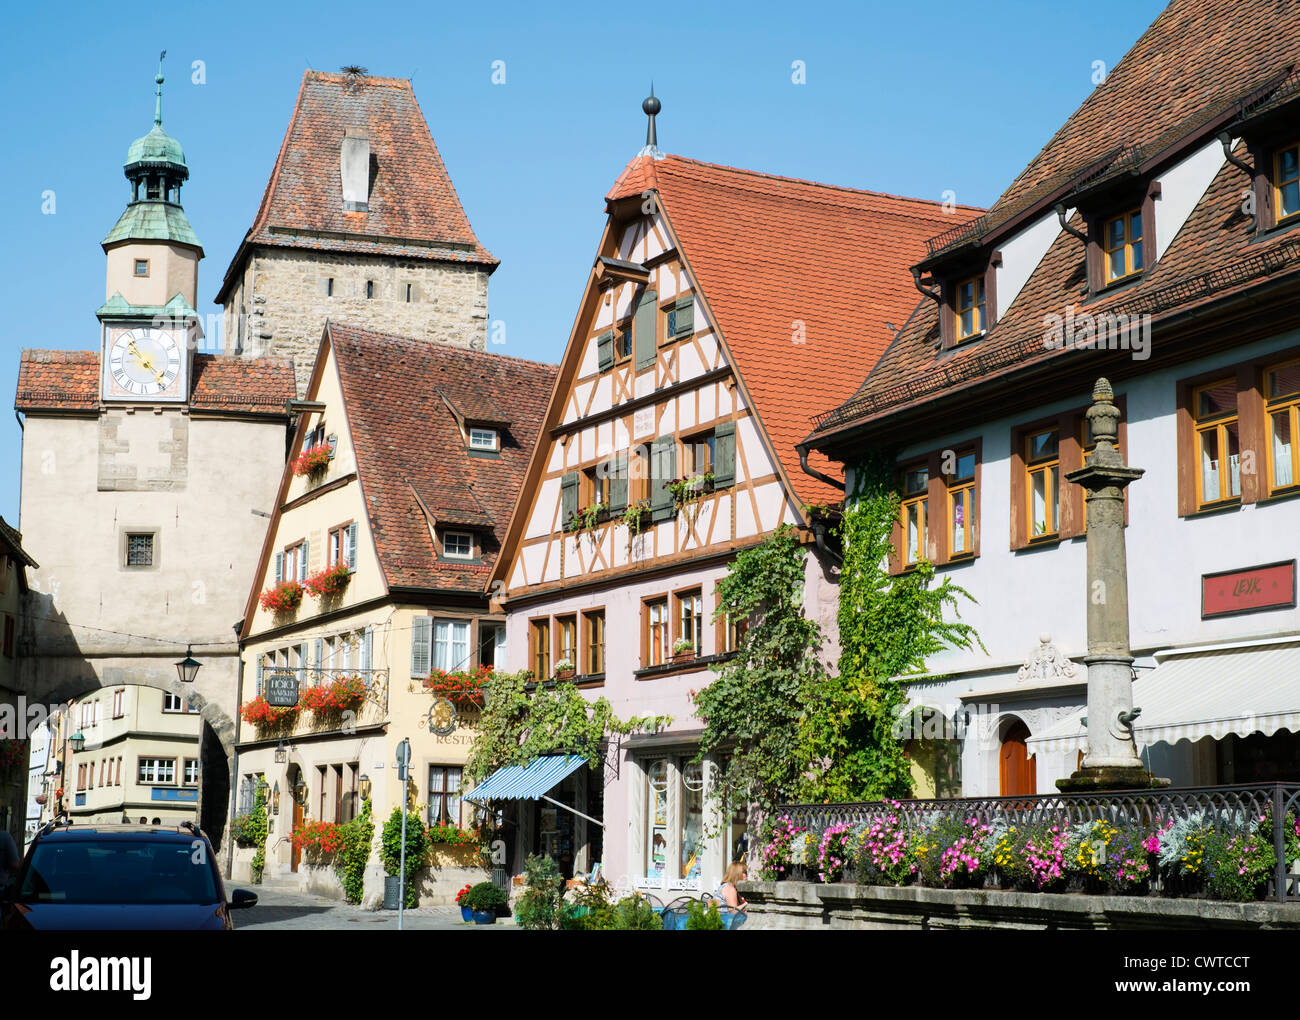 Rothenburg ob der Tauber medieval town in Bavaria Germany Stock Photo